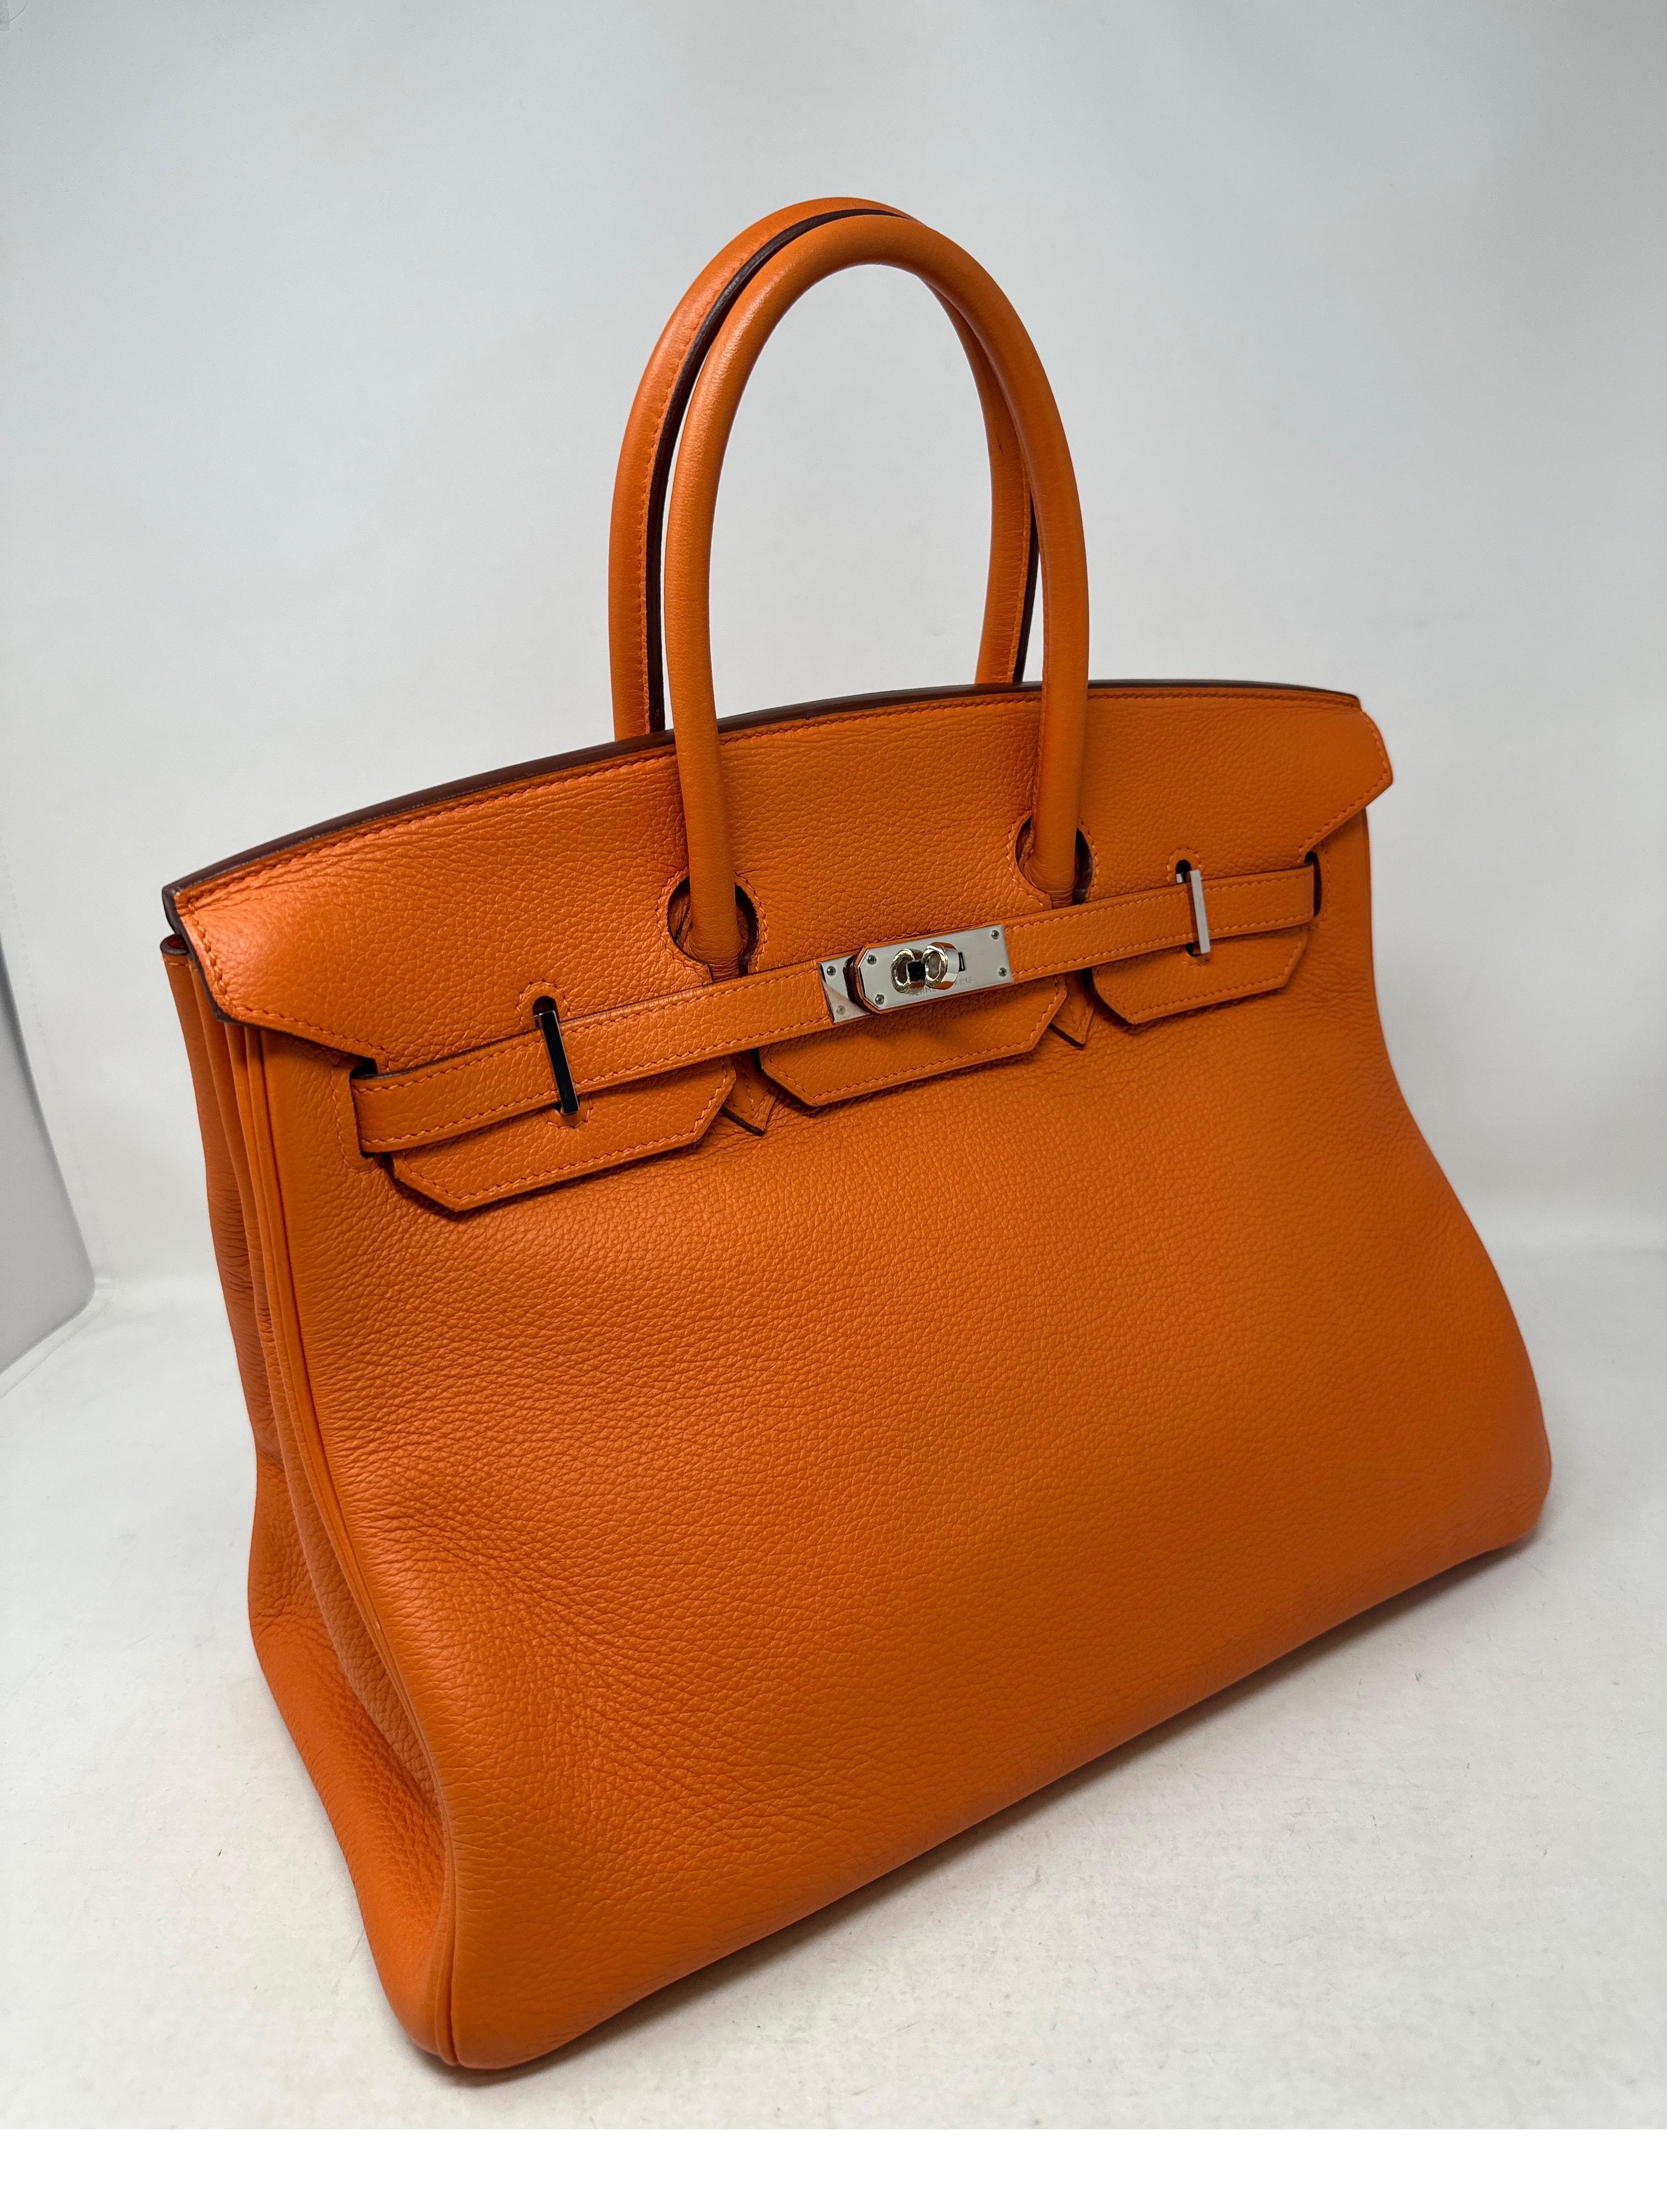 Hermès - Sac Birkin 35 orange  Excellent état à Athens, GA